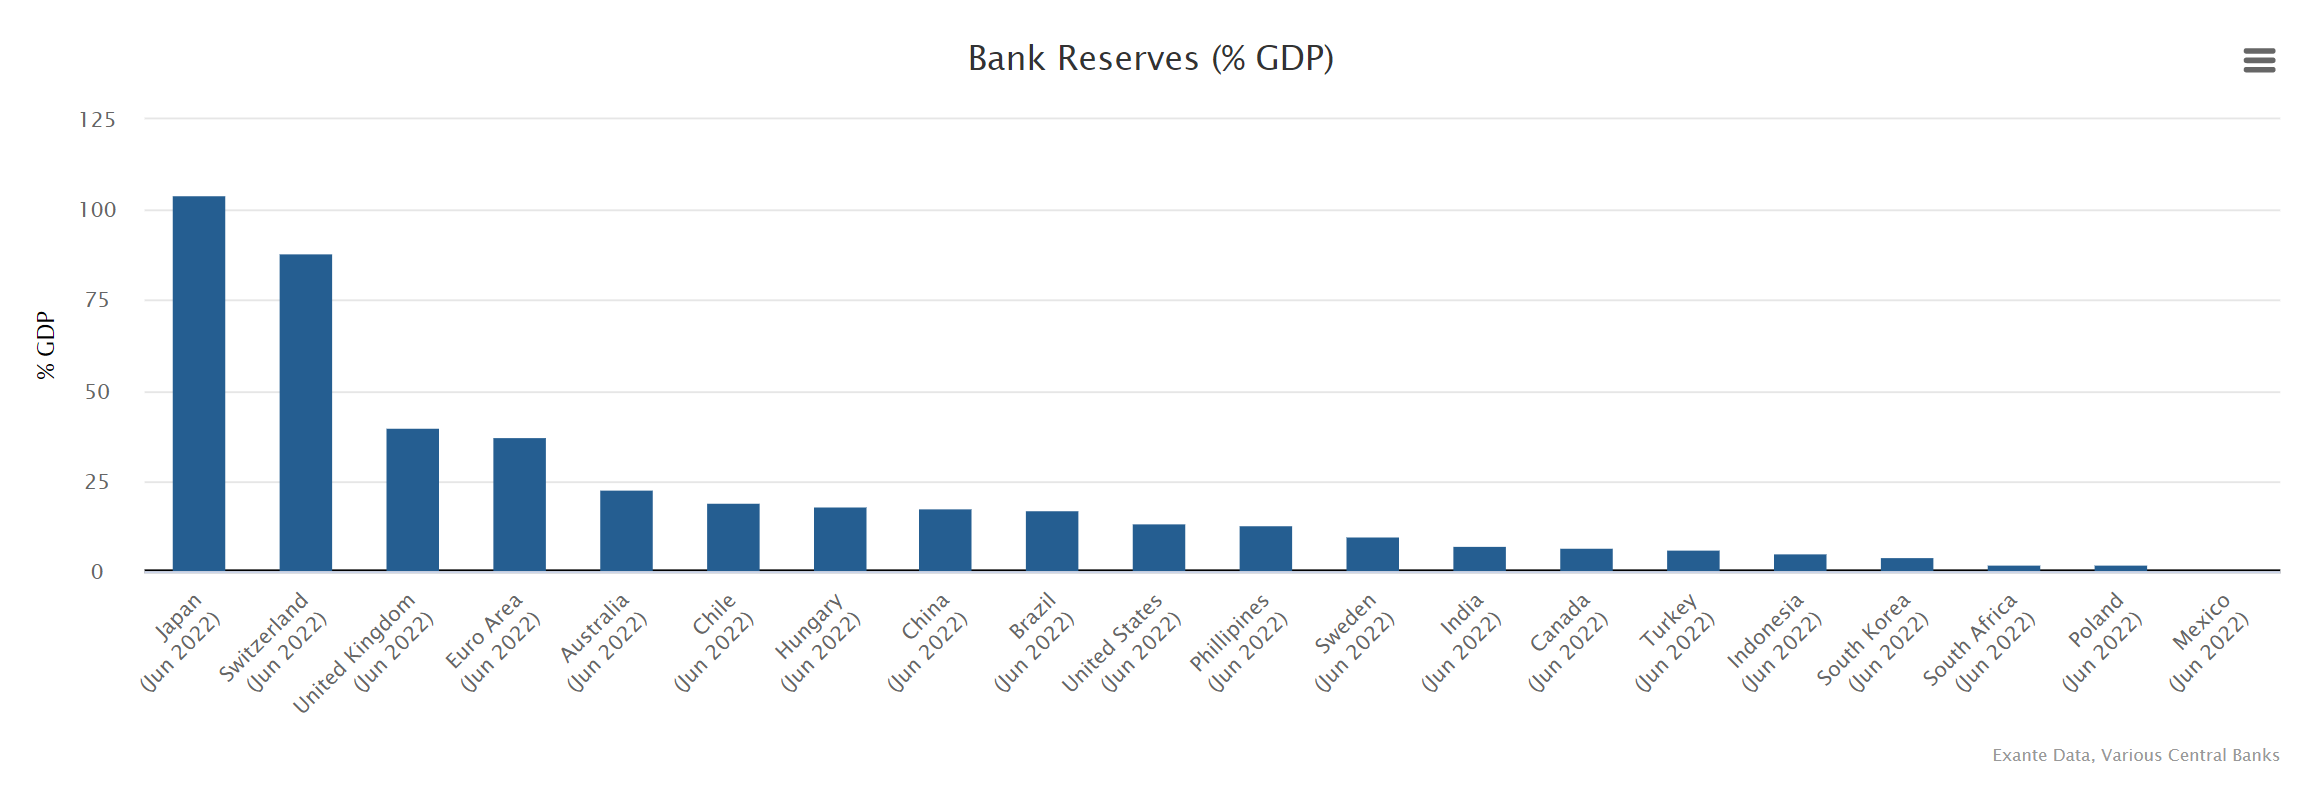 Banktillgodohavanden hos centralbanker